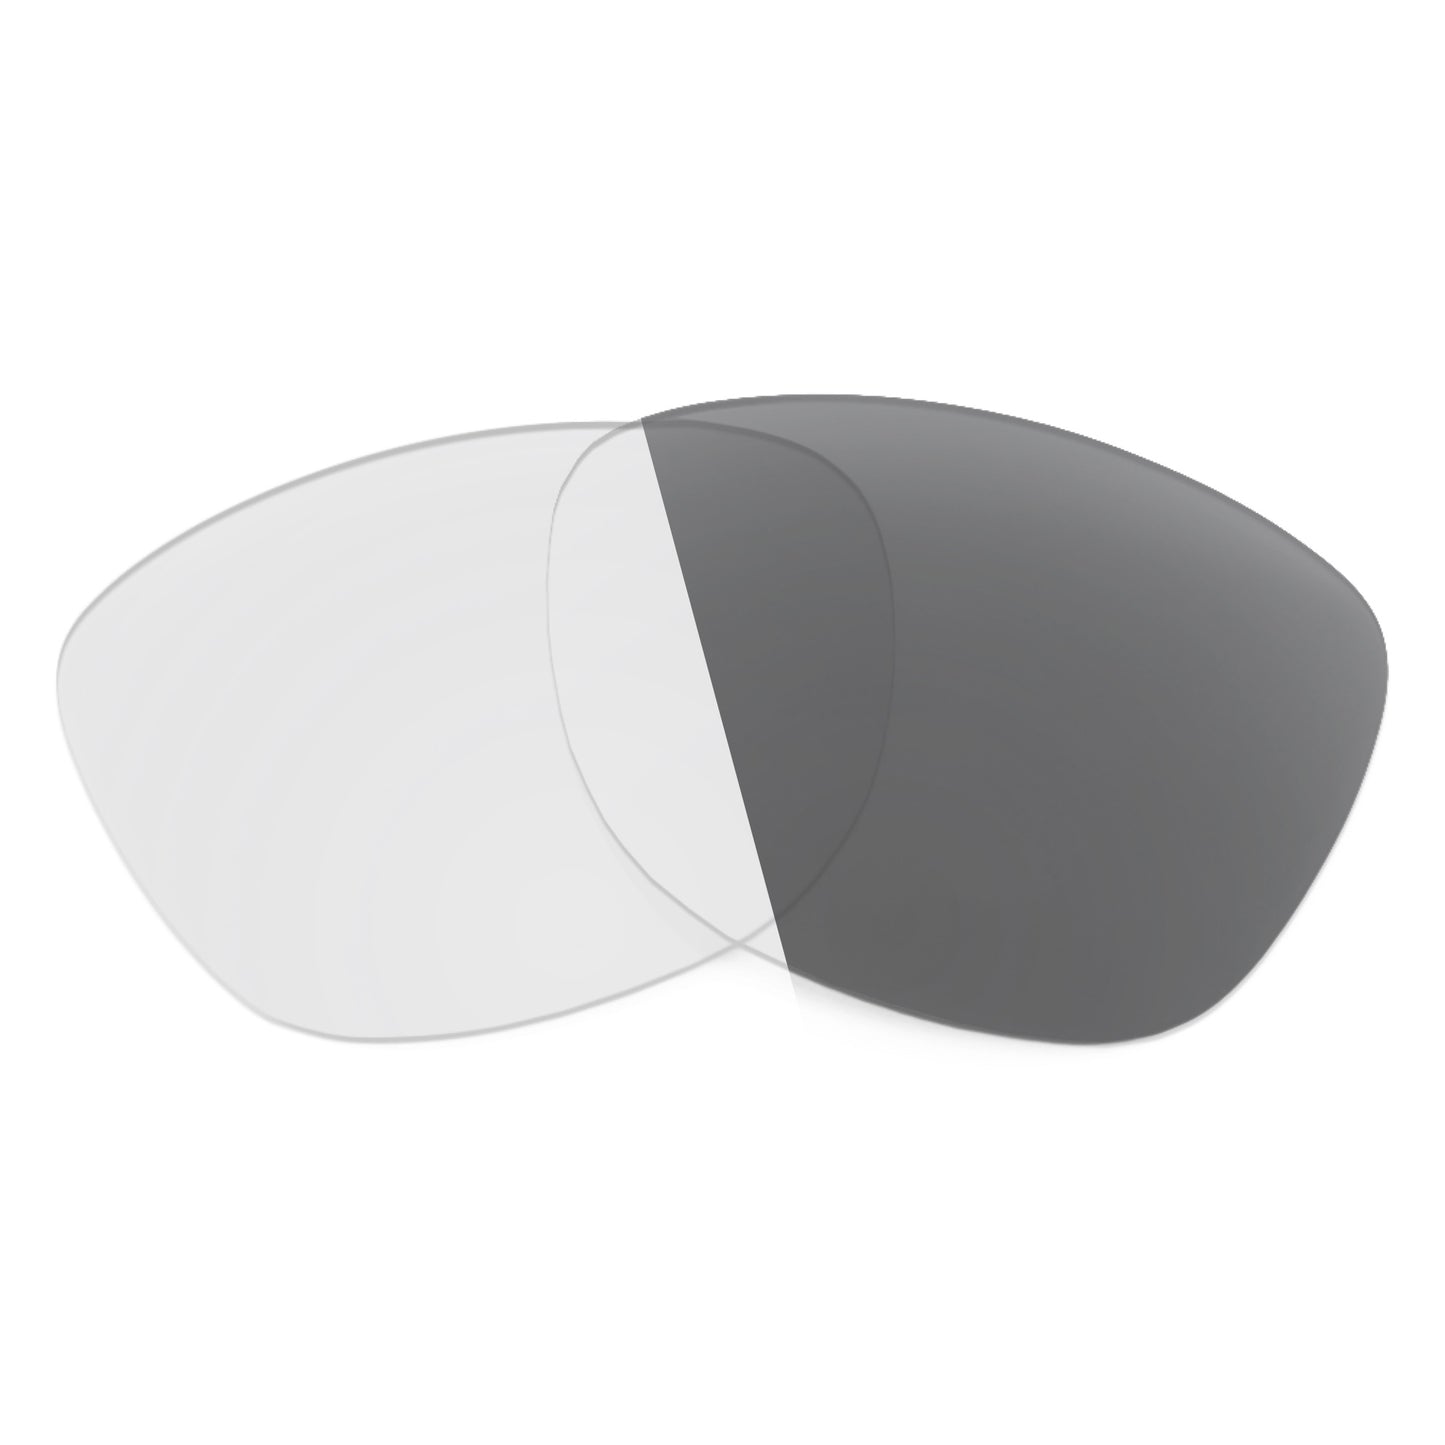 Revant replacement lenses for Oakley Sliver XL Non-Polarized Adapt Gray Photochromic